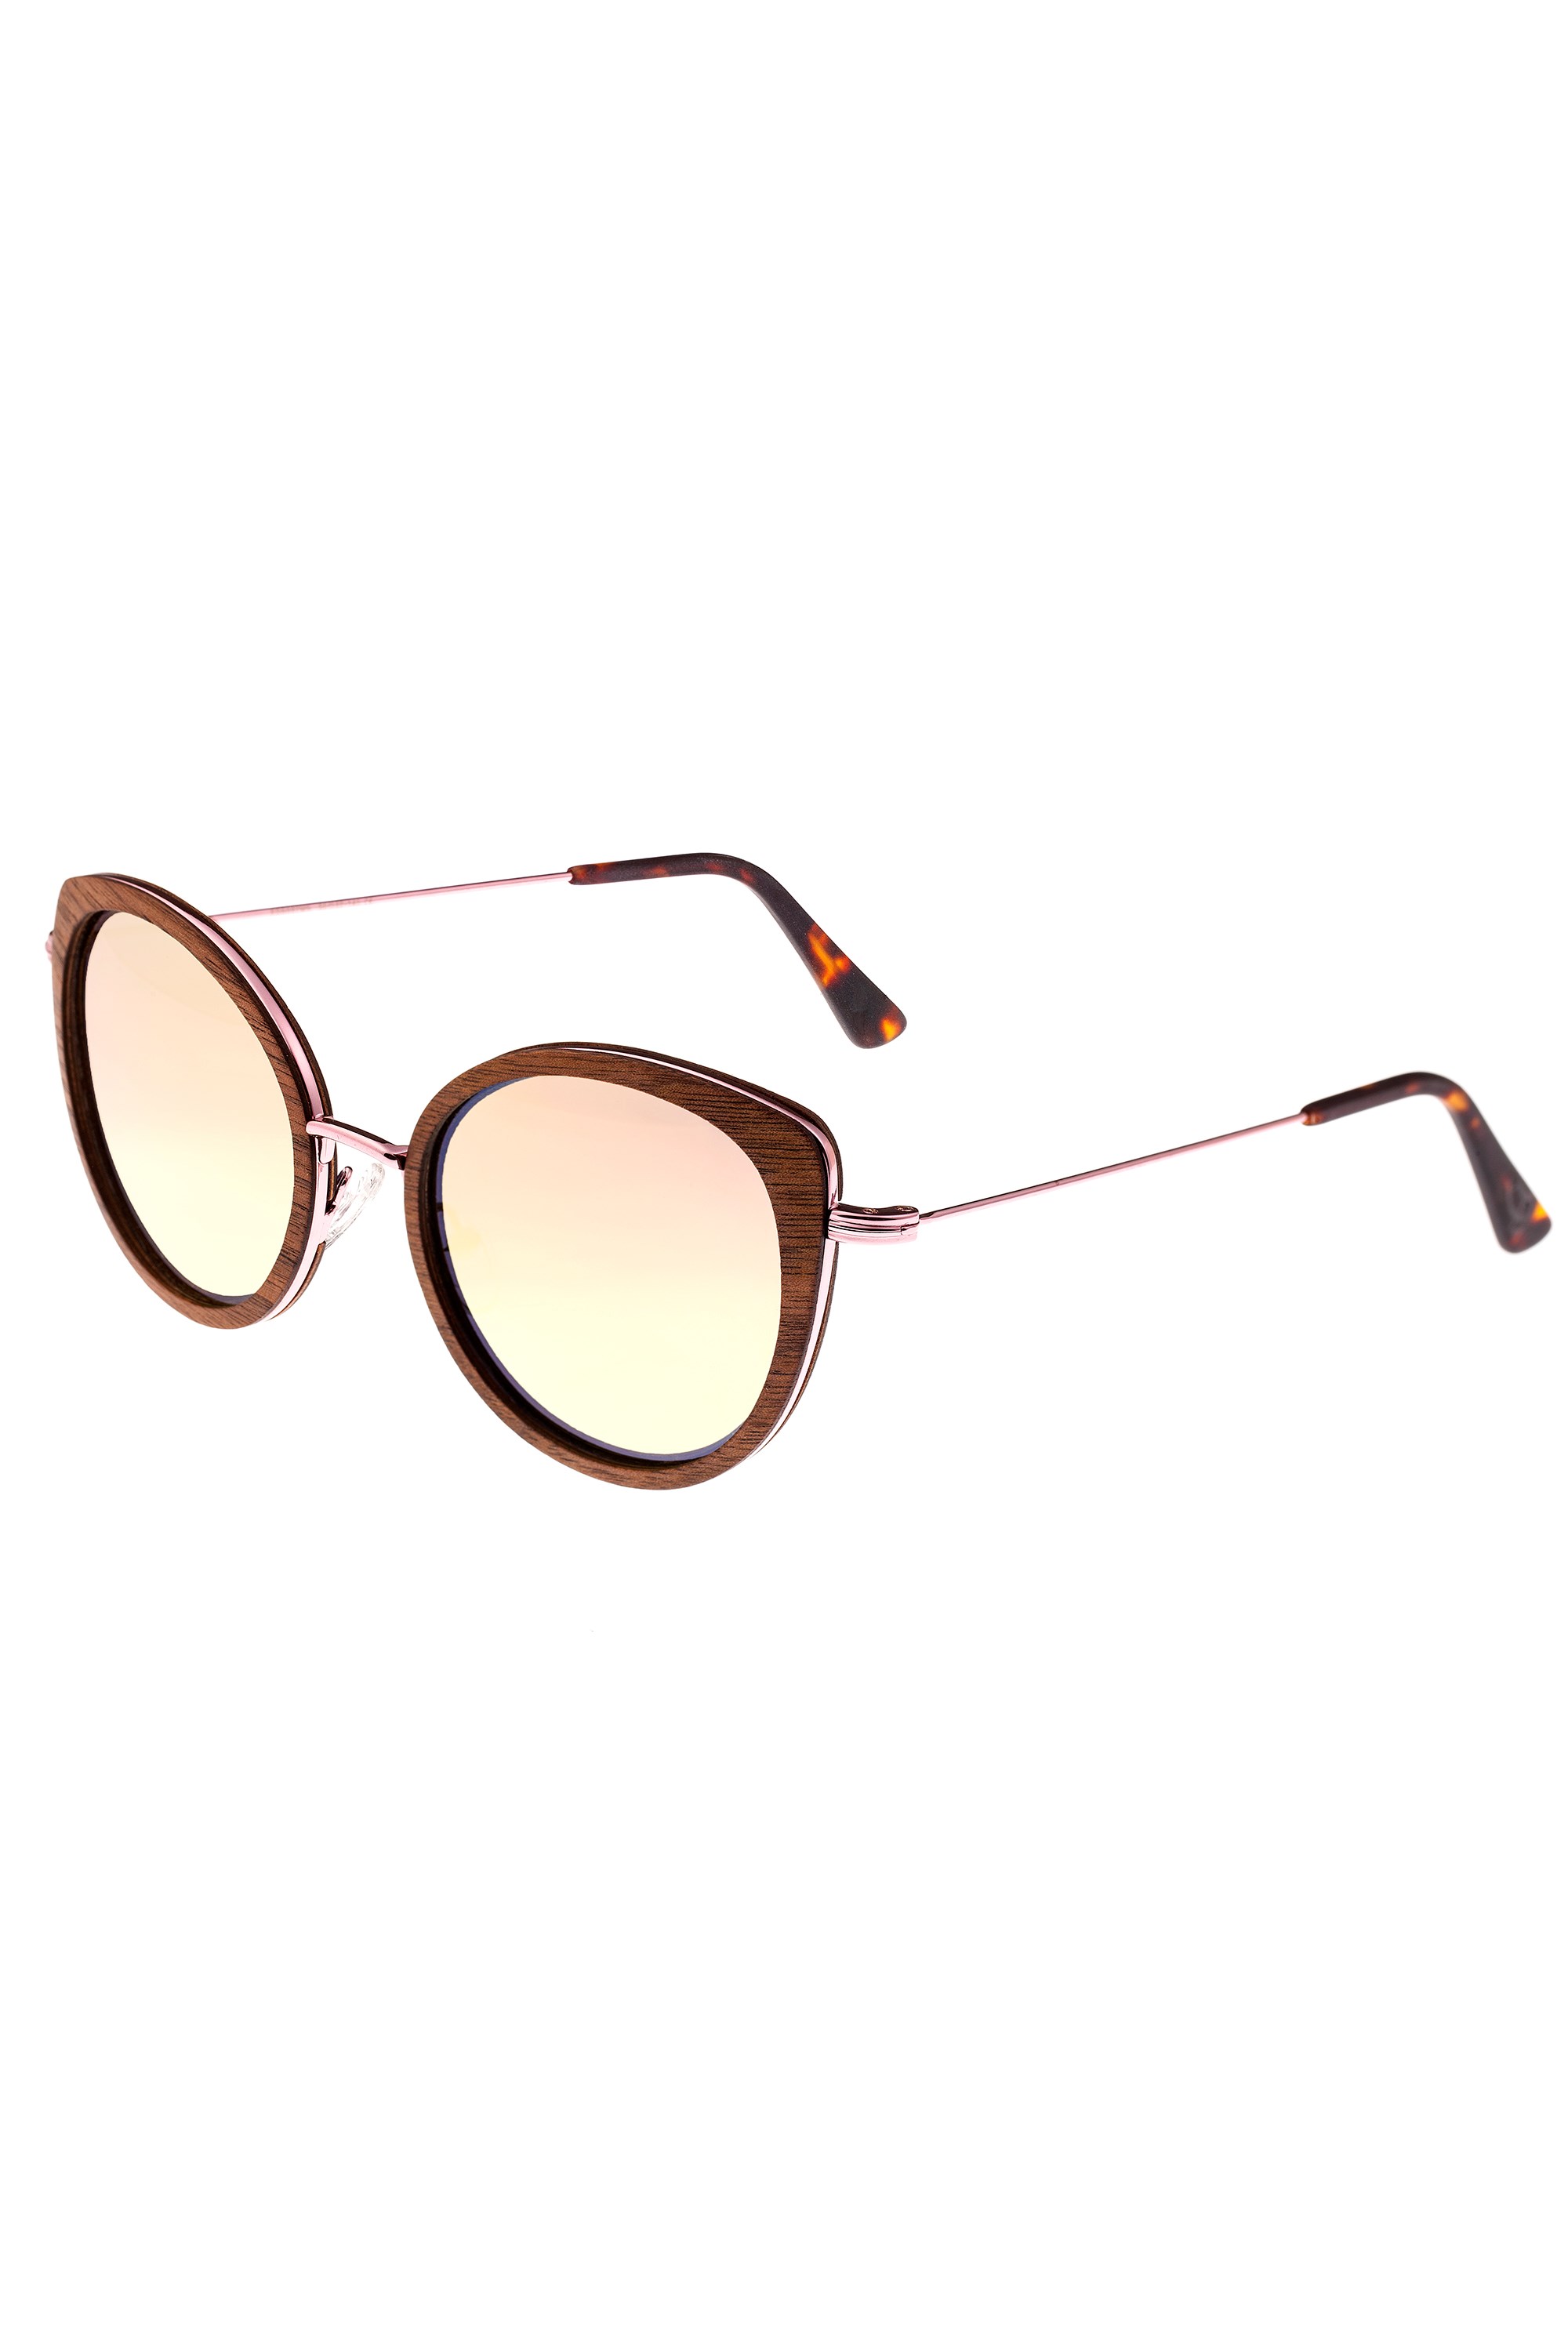 Oreti Polarized Sunglasses -